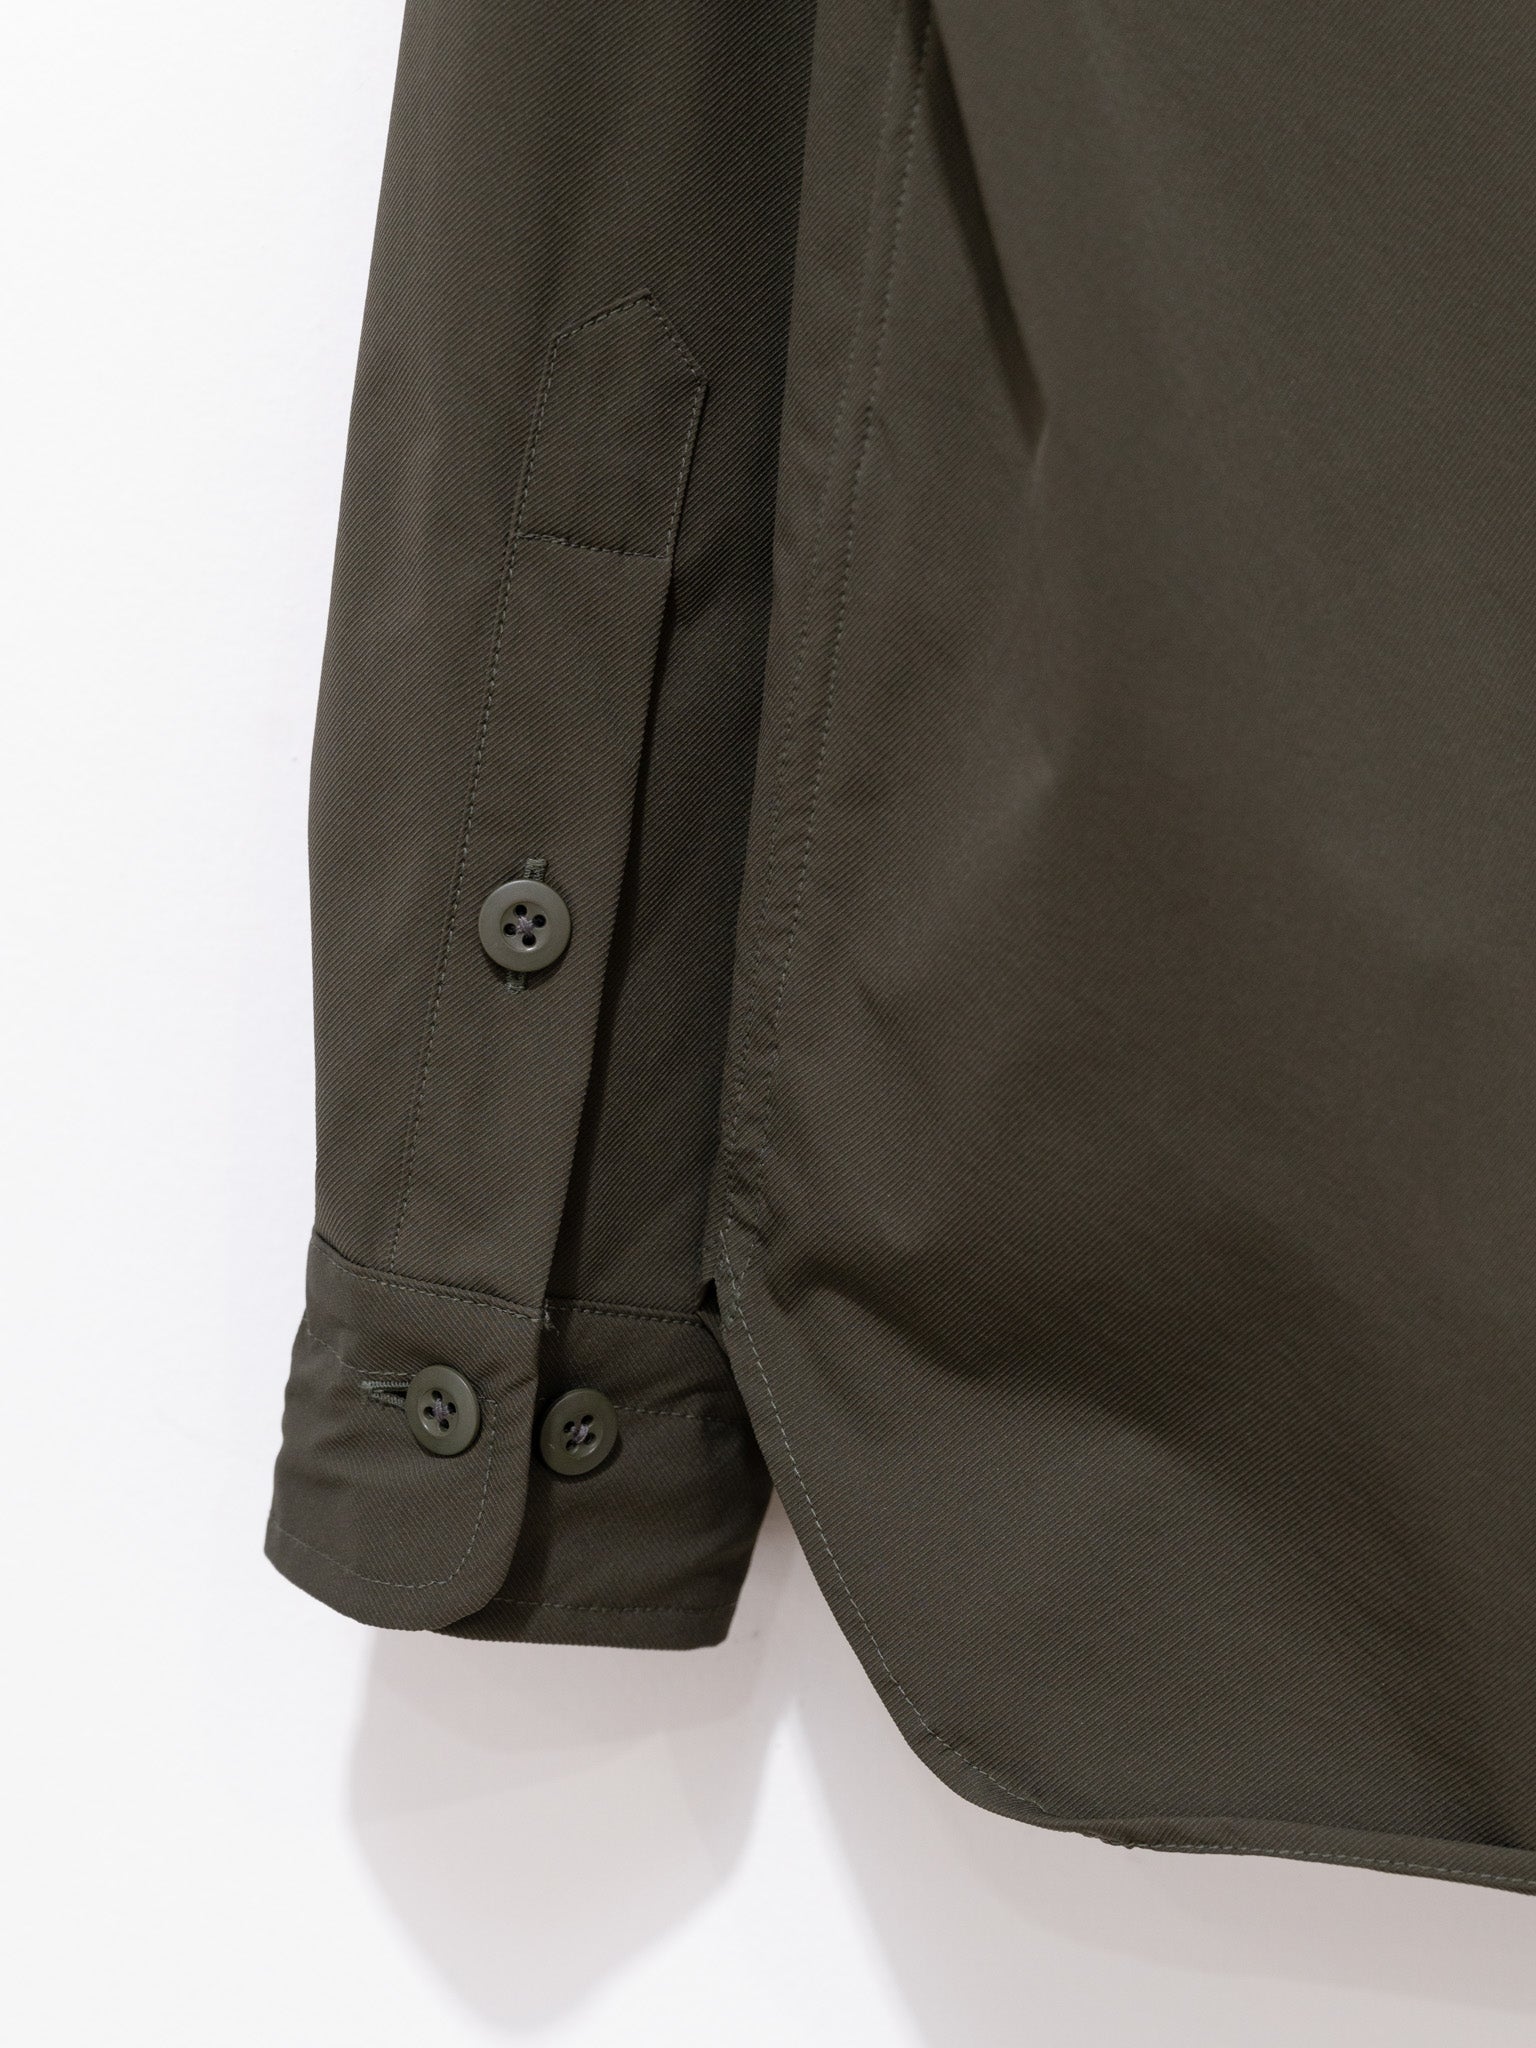 Namu Shop - ts(s) SOLOTEX Polyester Stretch CPO Shirt Jacket - Olive